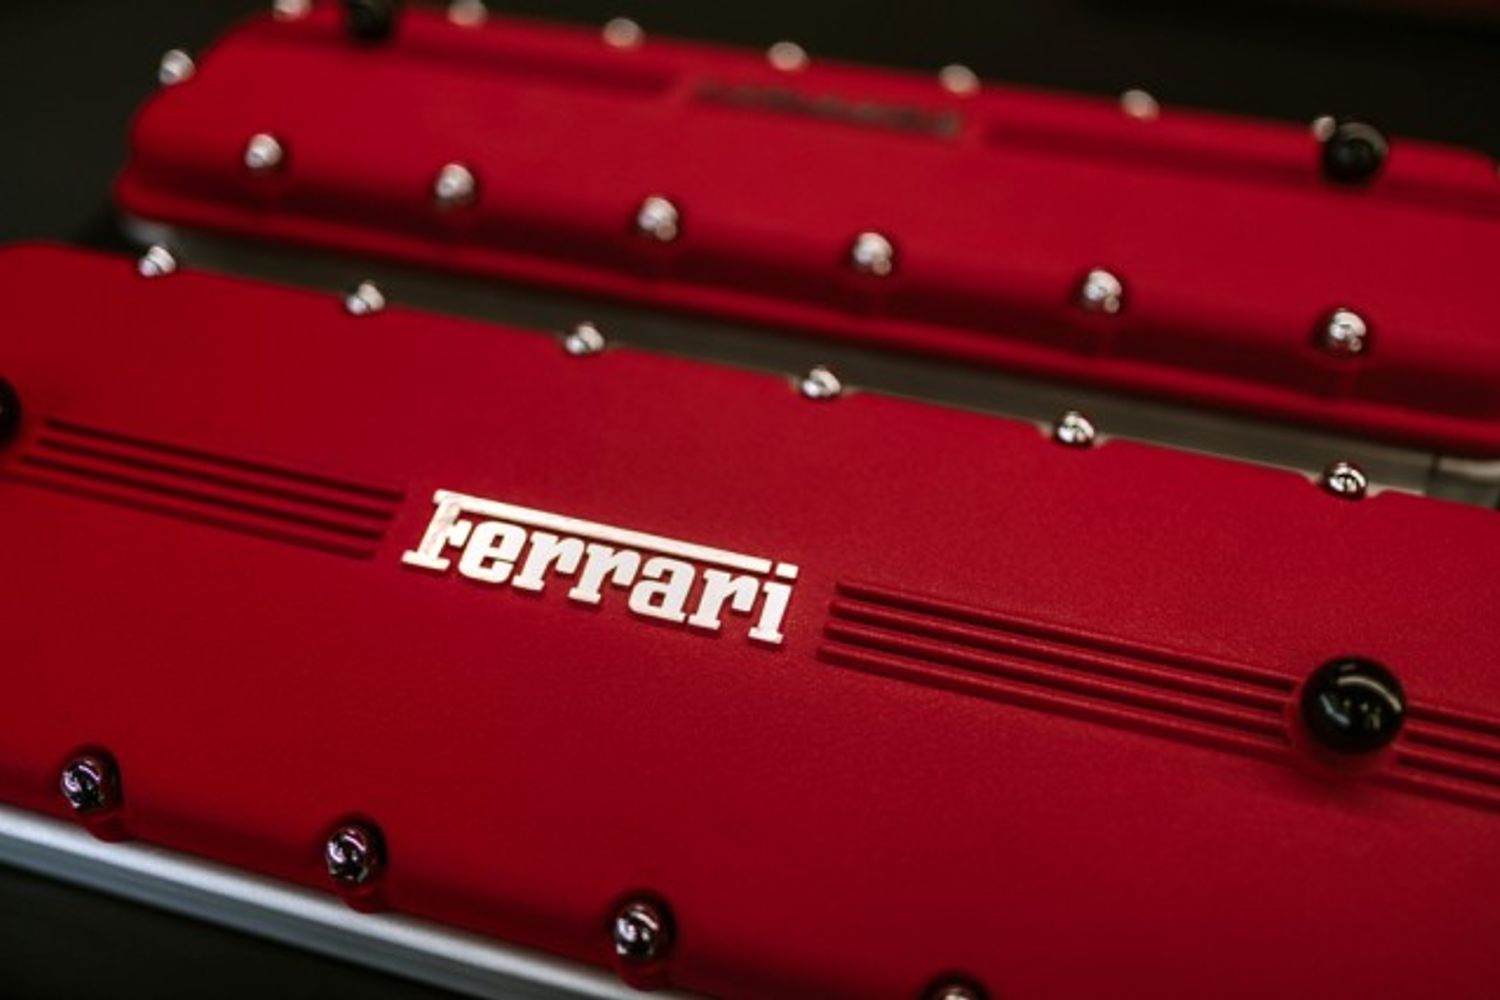 FERRARI Taschen's Ferrari Book Limited Edition